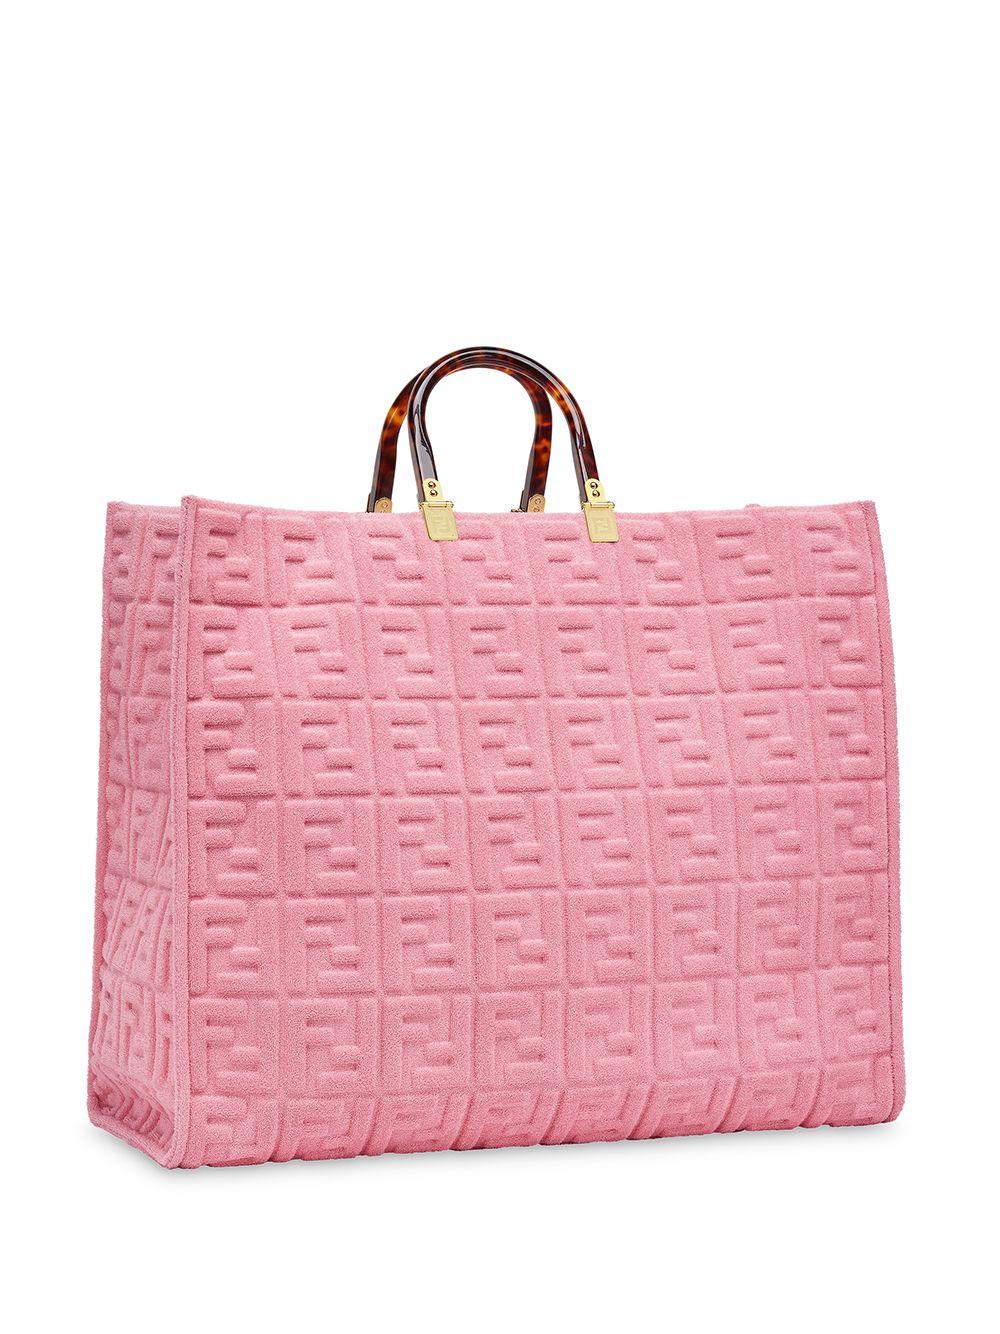 Fendi Terry Sunshine Tote Bag in Pink